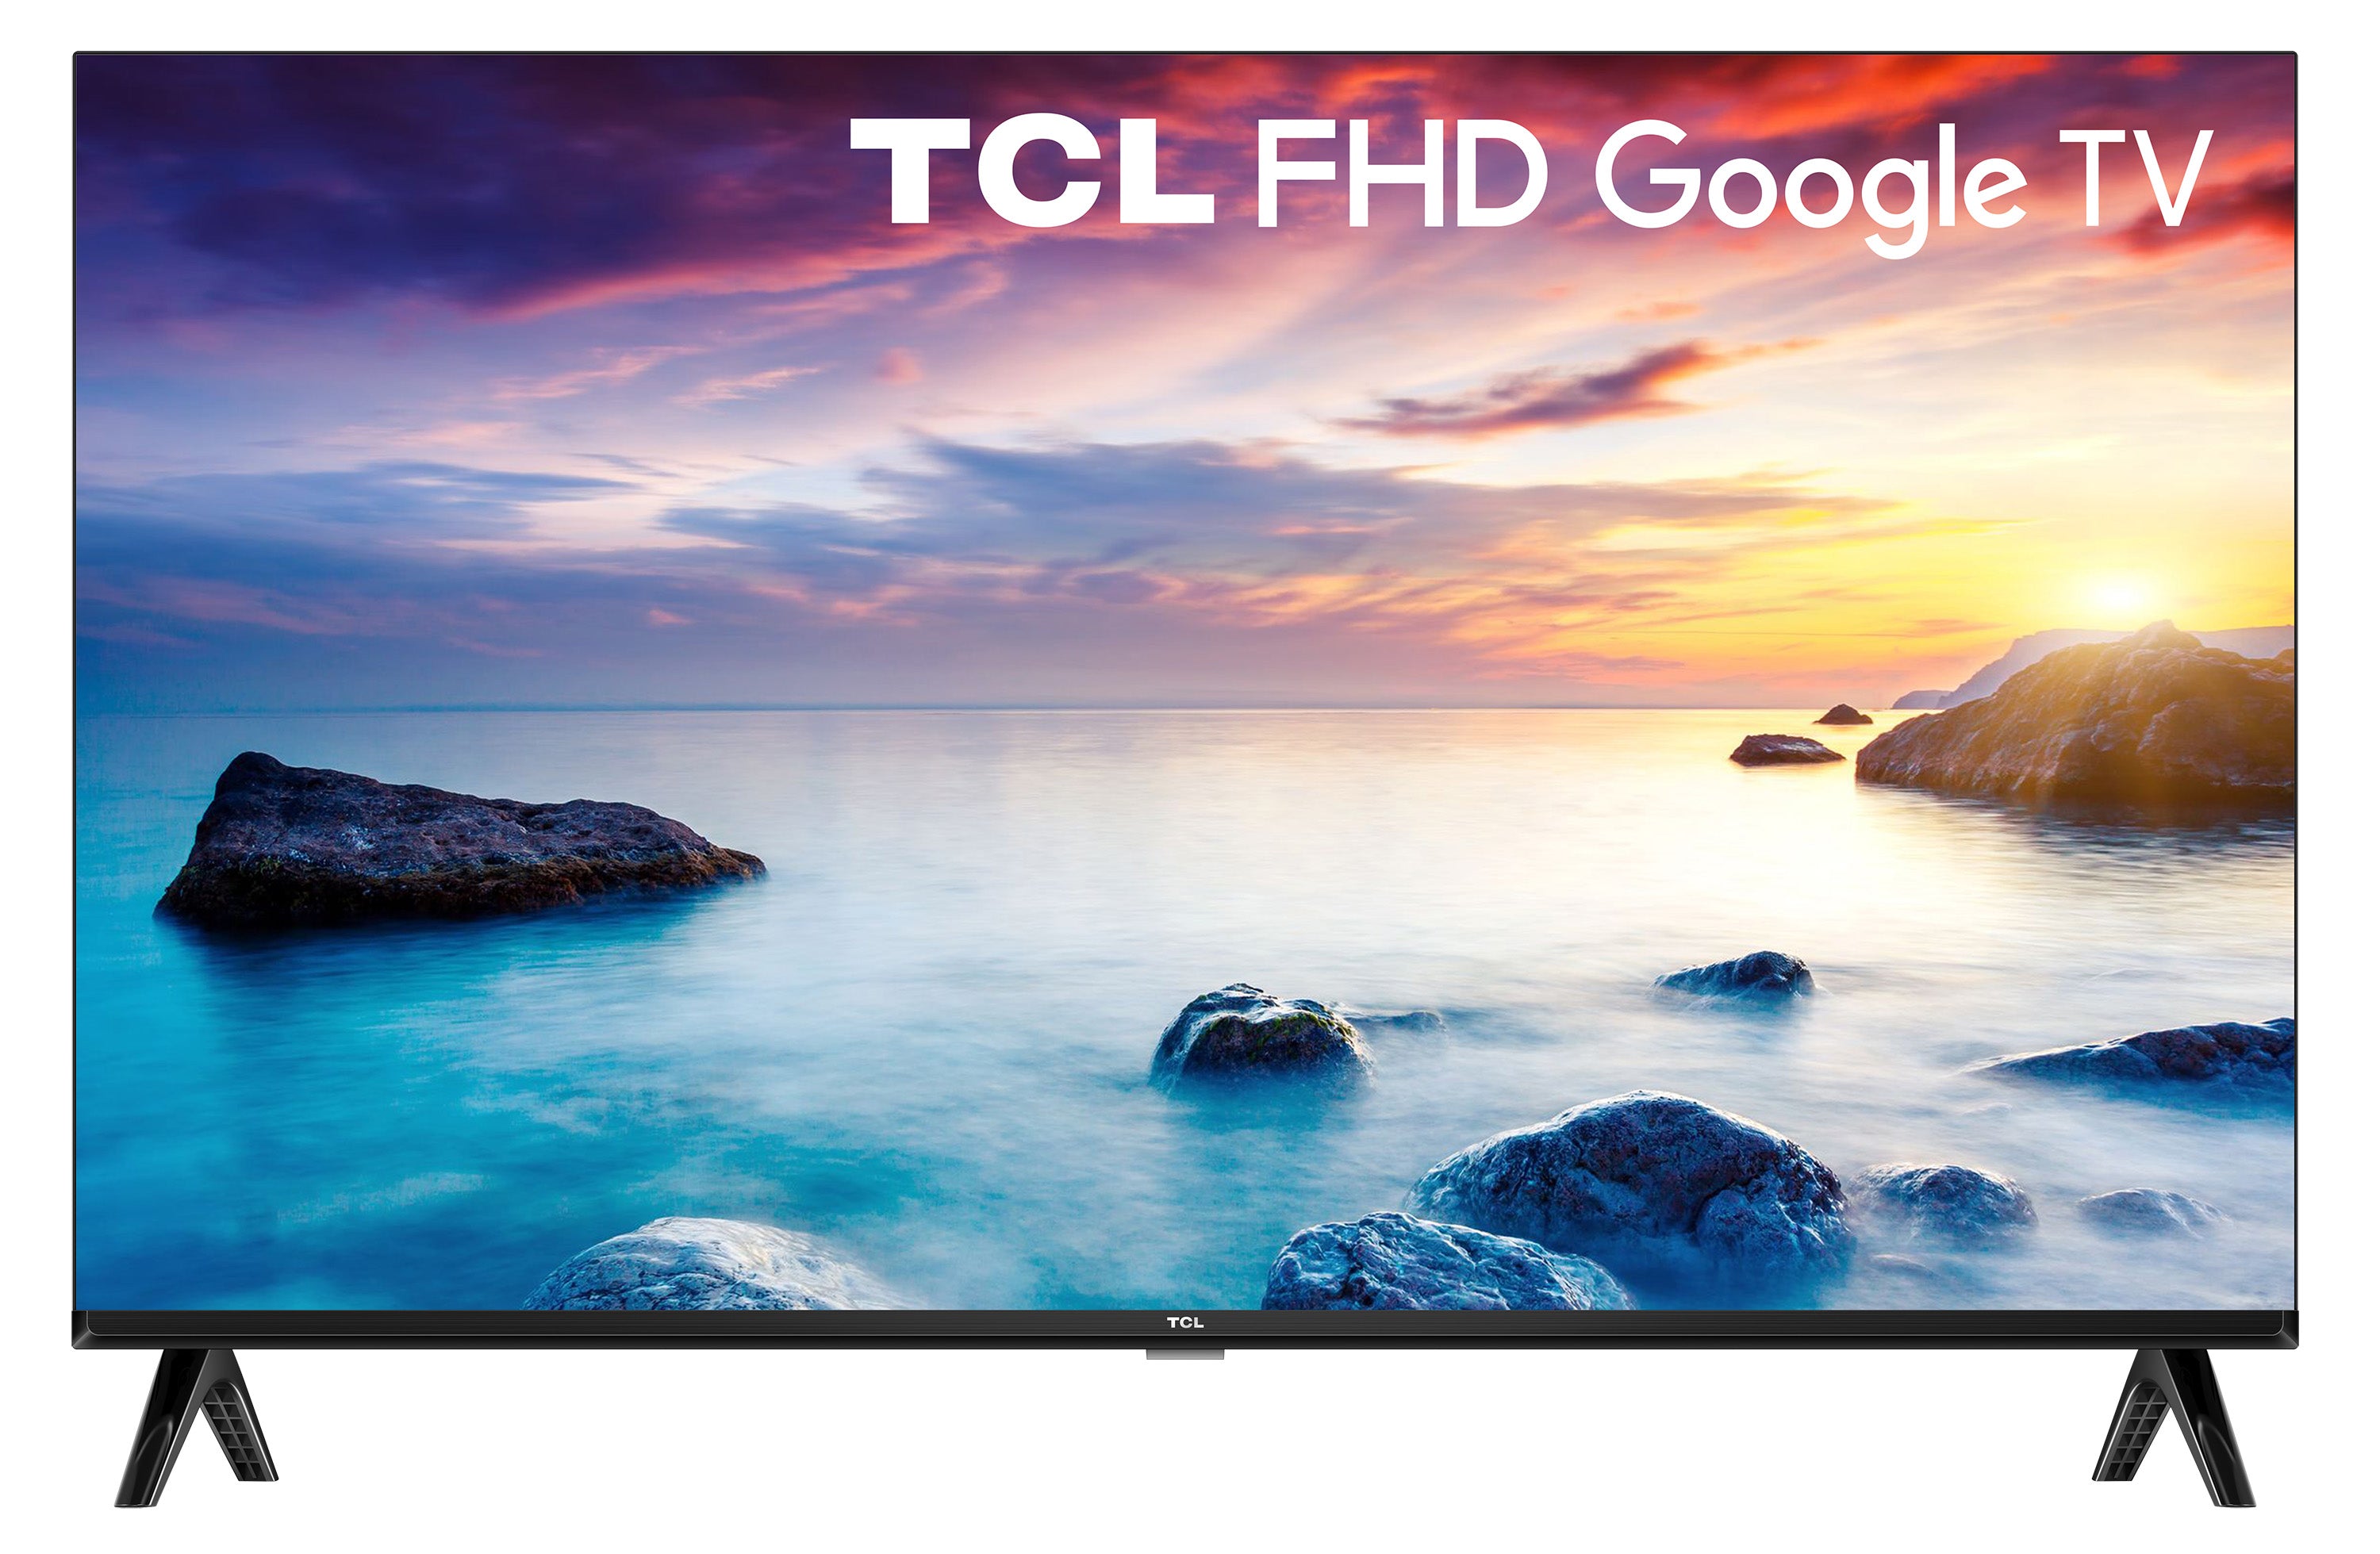 TCL S5400 全高清 Google 電視